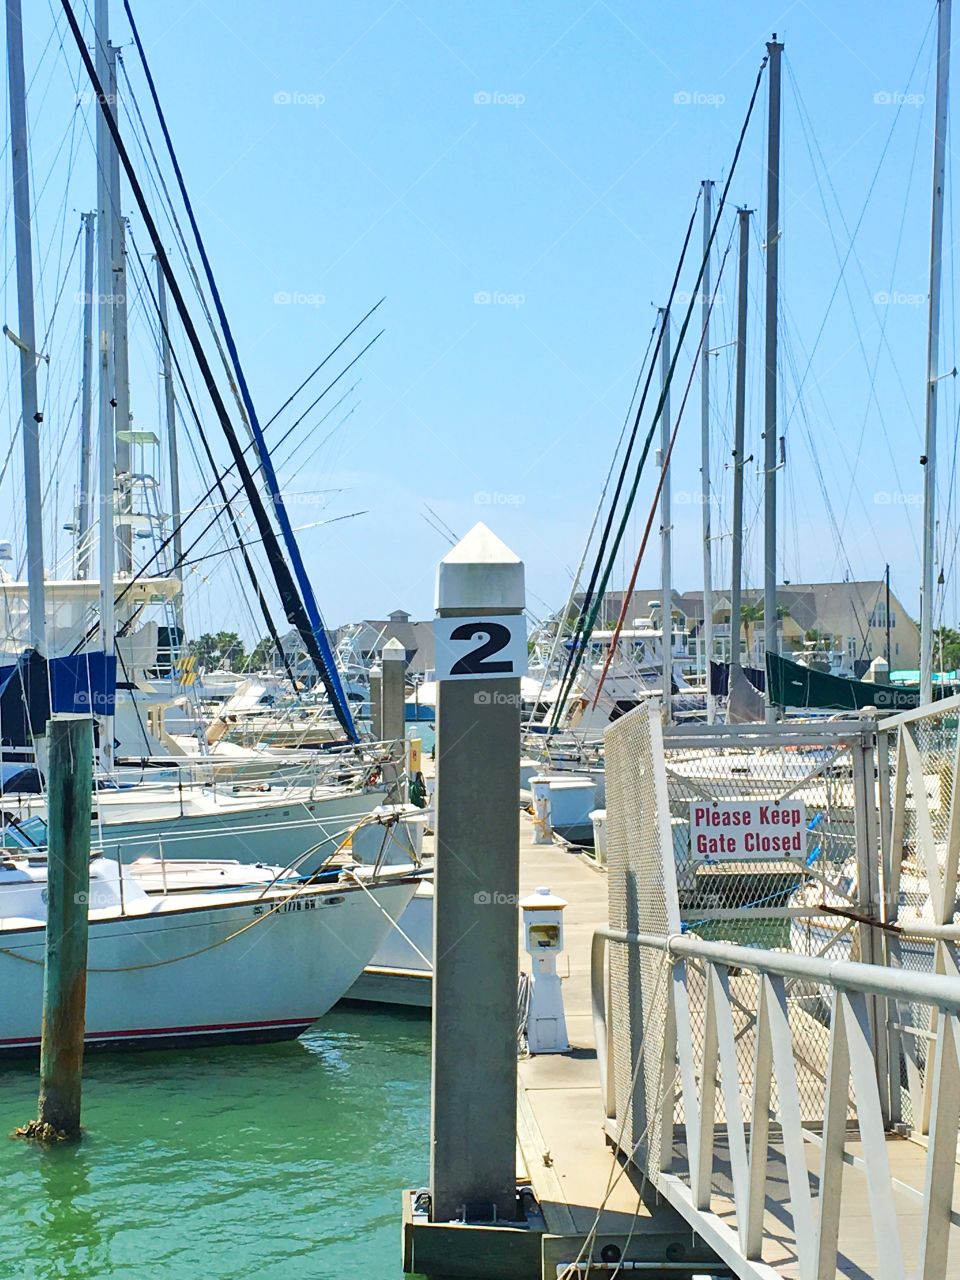 Dock 2 in the harbor at Port Aransas, Texas. 